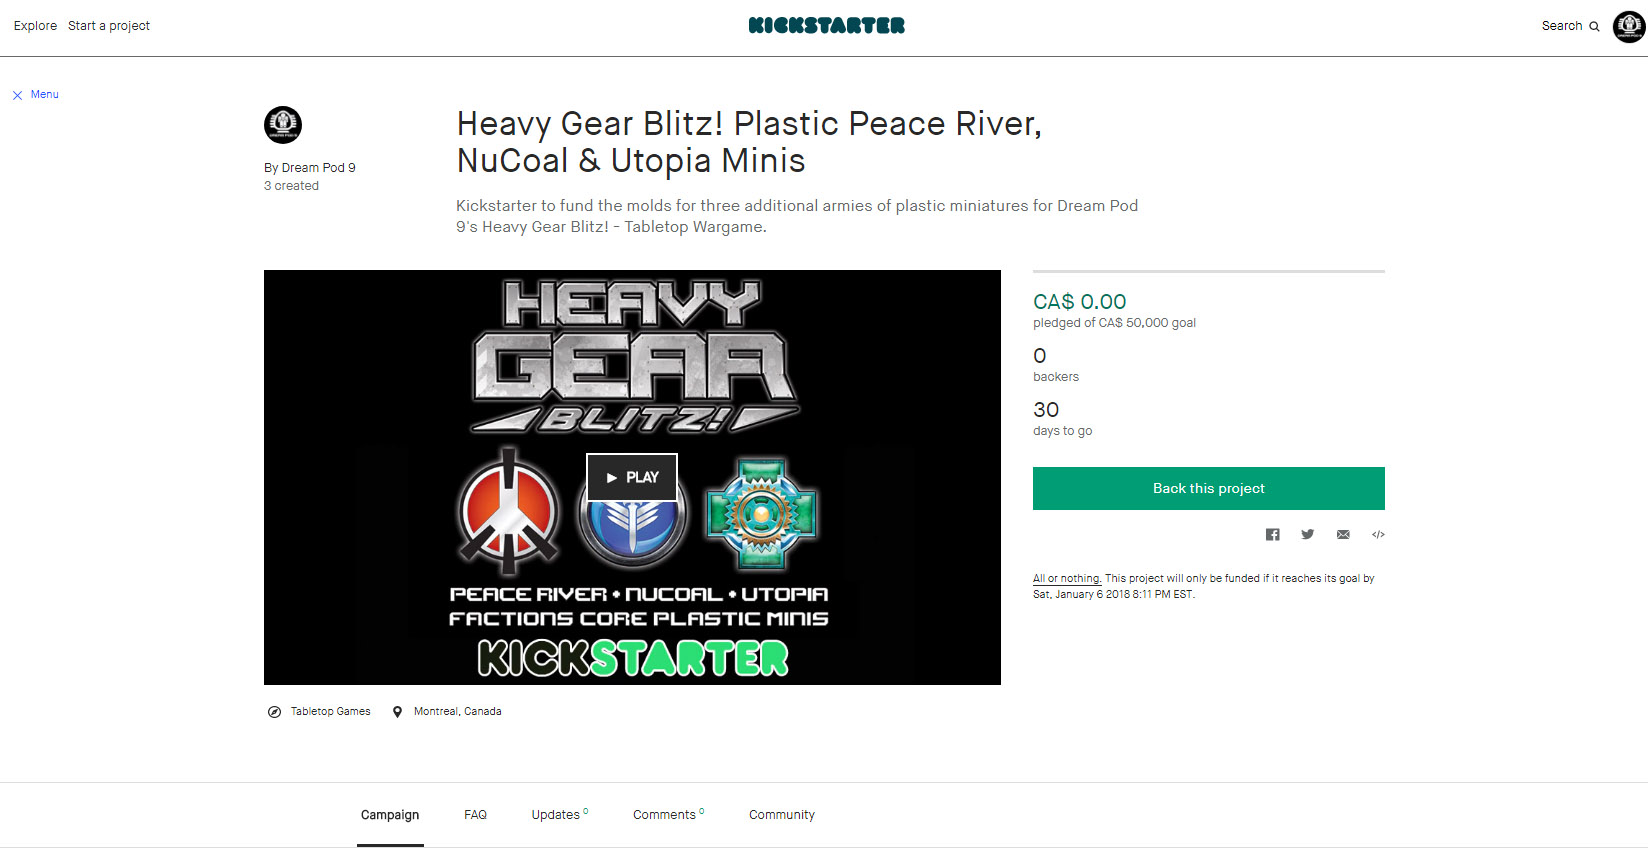 Heavy Gear Blitz Kickstarter #2 is Live!